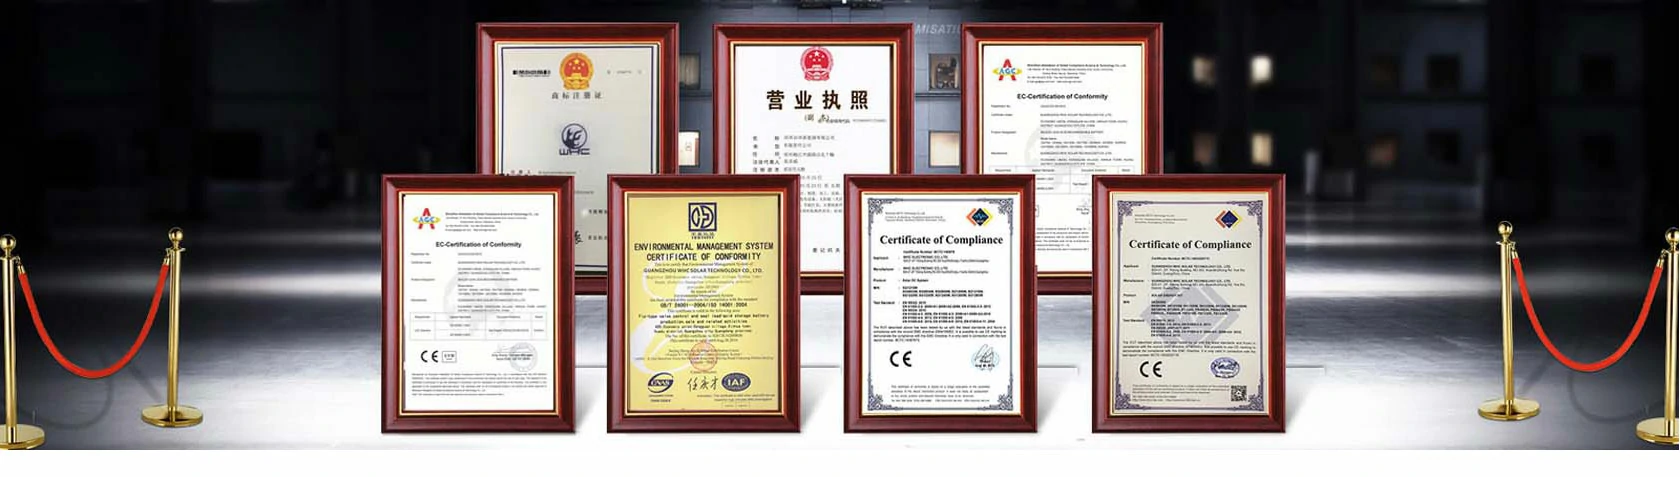 whc solar certificate